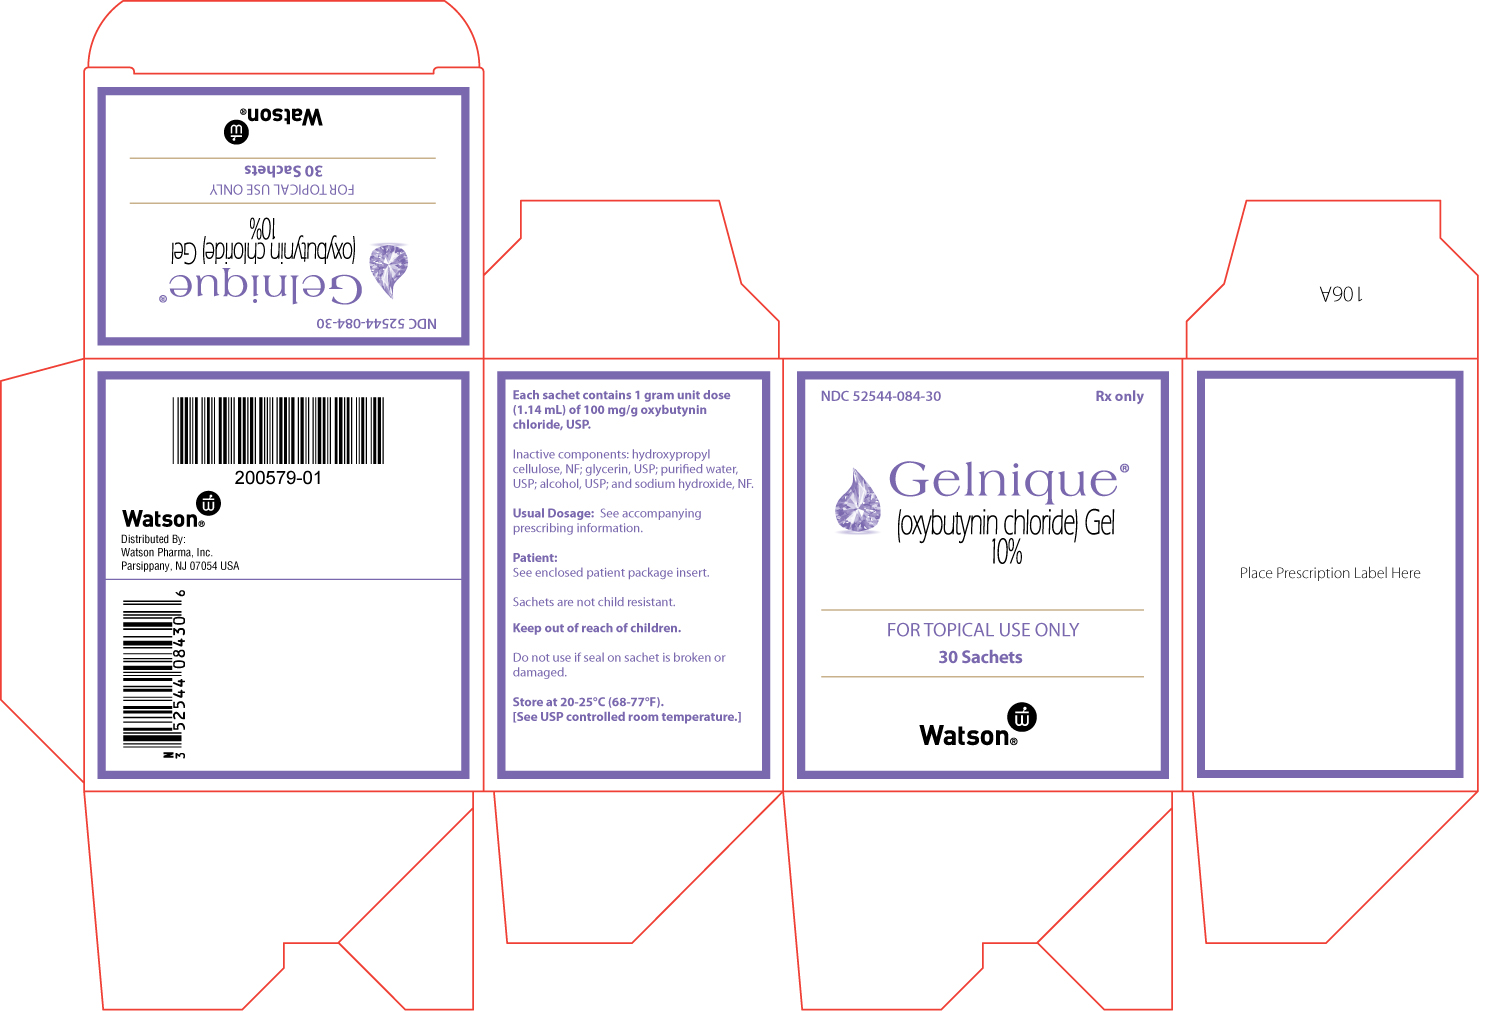 Gelnique® (oxybutynin chloride) Gel, 10% Carton 30 Sachets NDC 52544-084-30